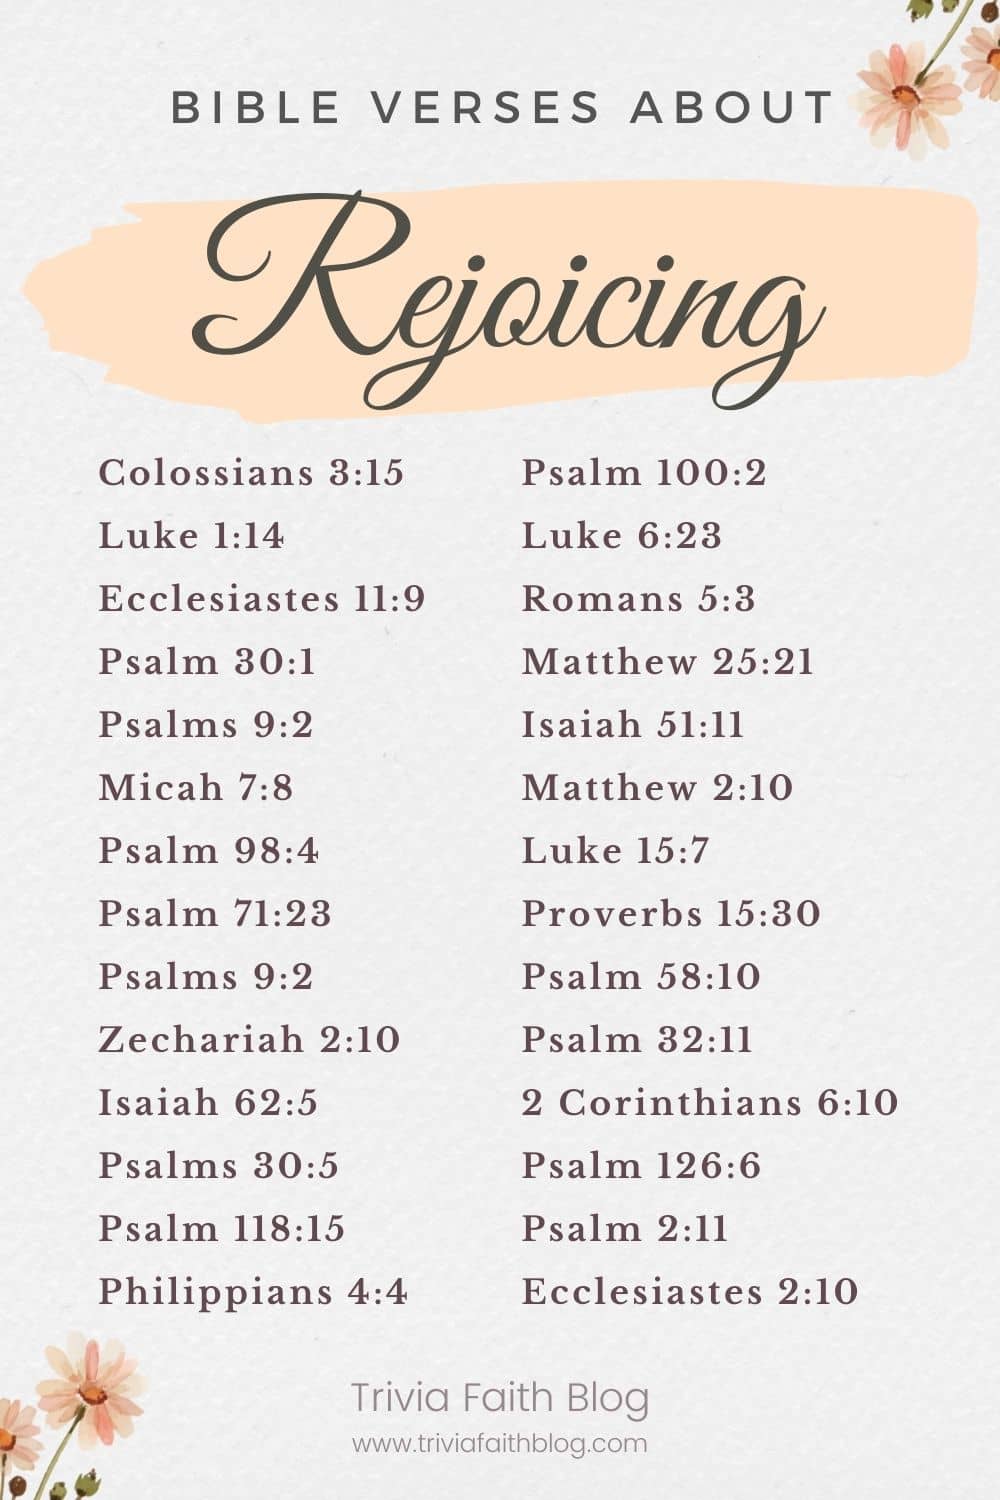 Bible verses about Rejoicing KJV